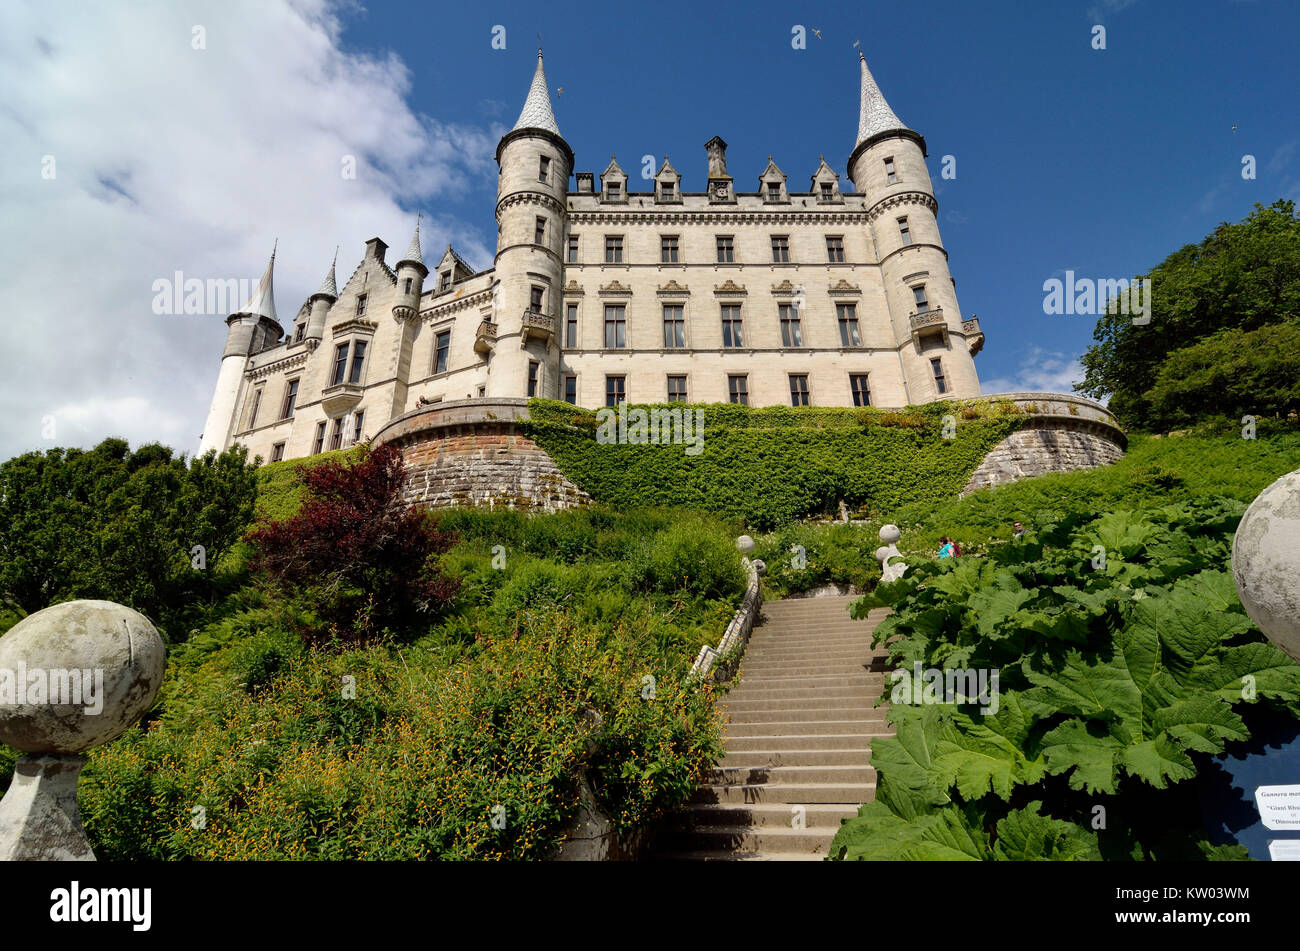 L'Écosse, Highlands, château du Comte de Sutherland, Dunrobin castle, Schottland, Highlands, Schloss des Comte de Sutherland Banque D'Images